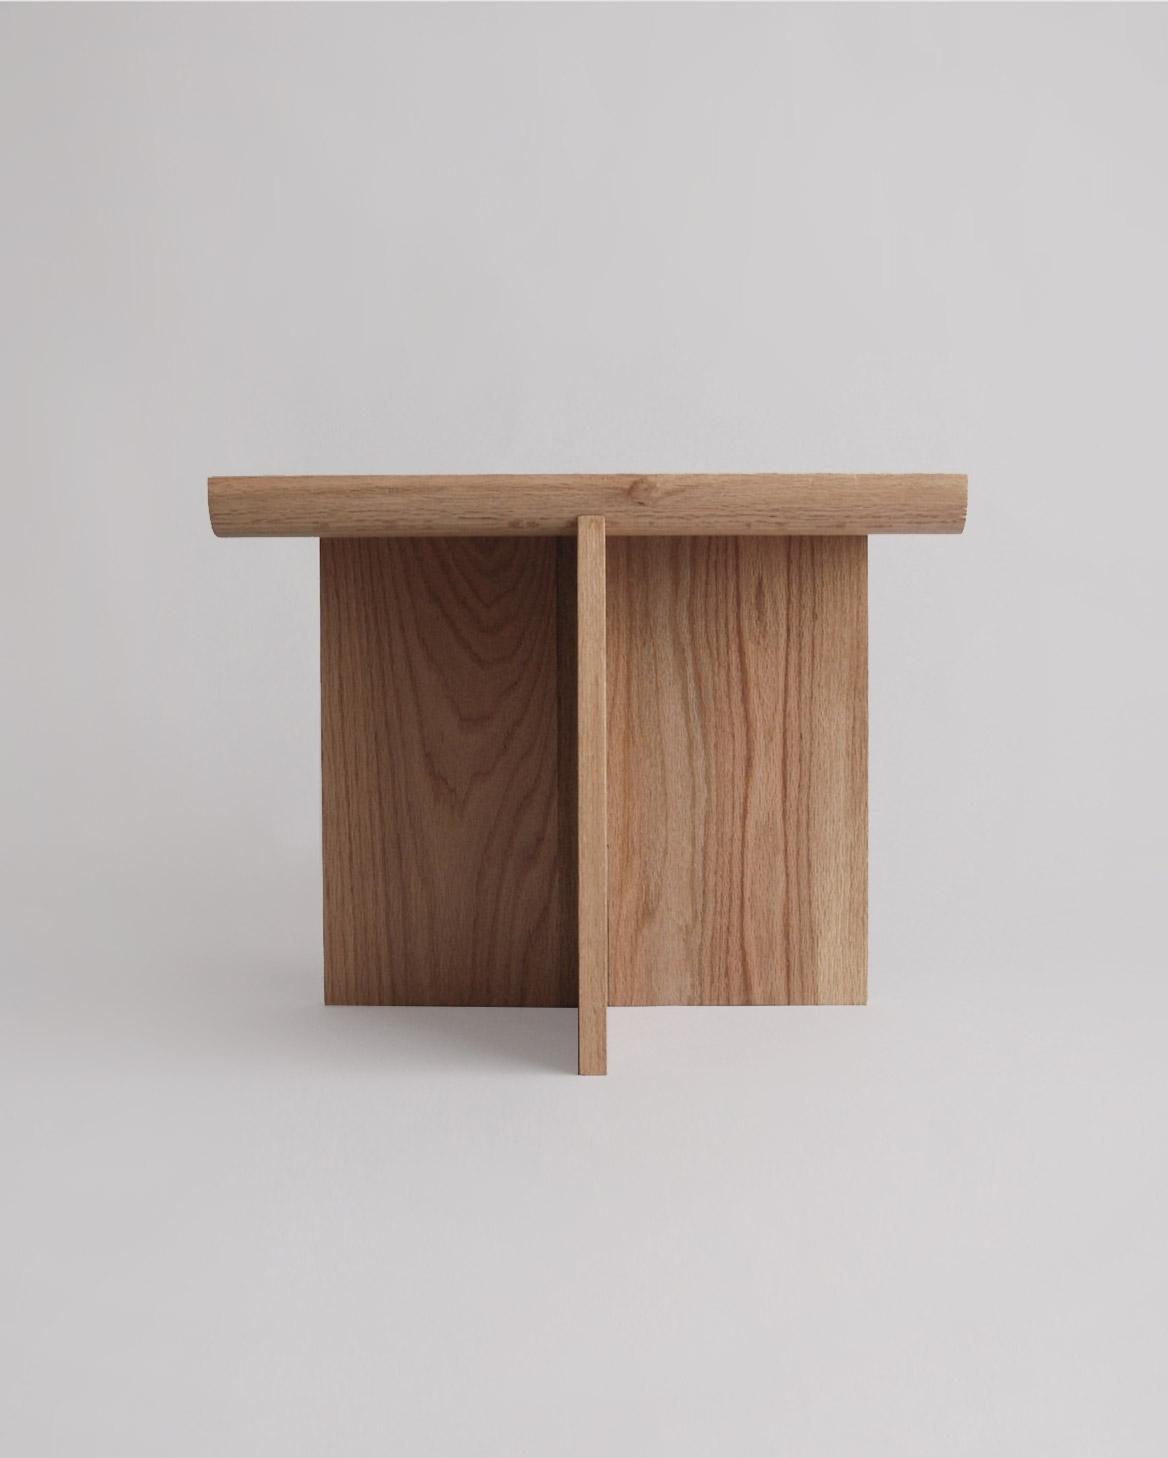 Minimalist Table Design "Norte" by Dear Durango | Aesence